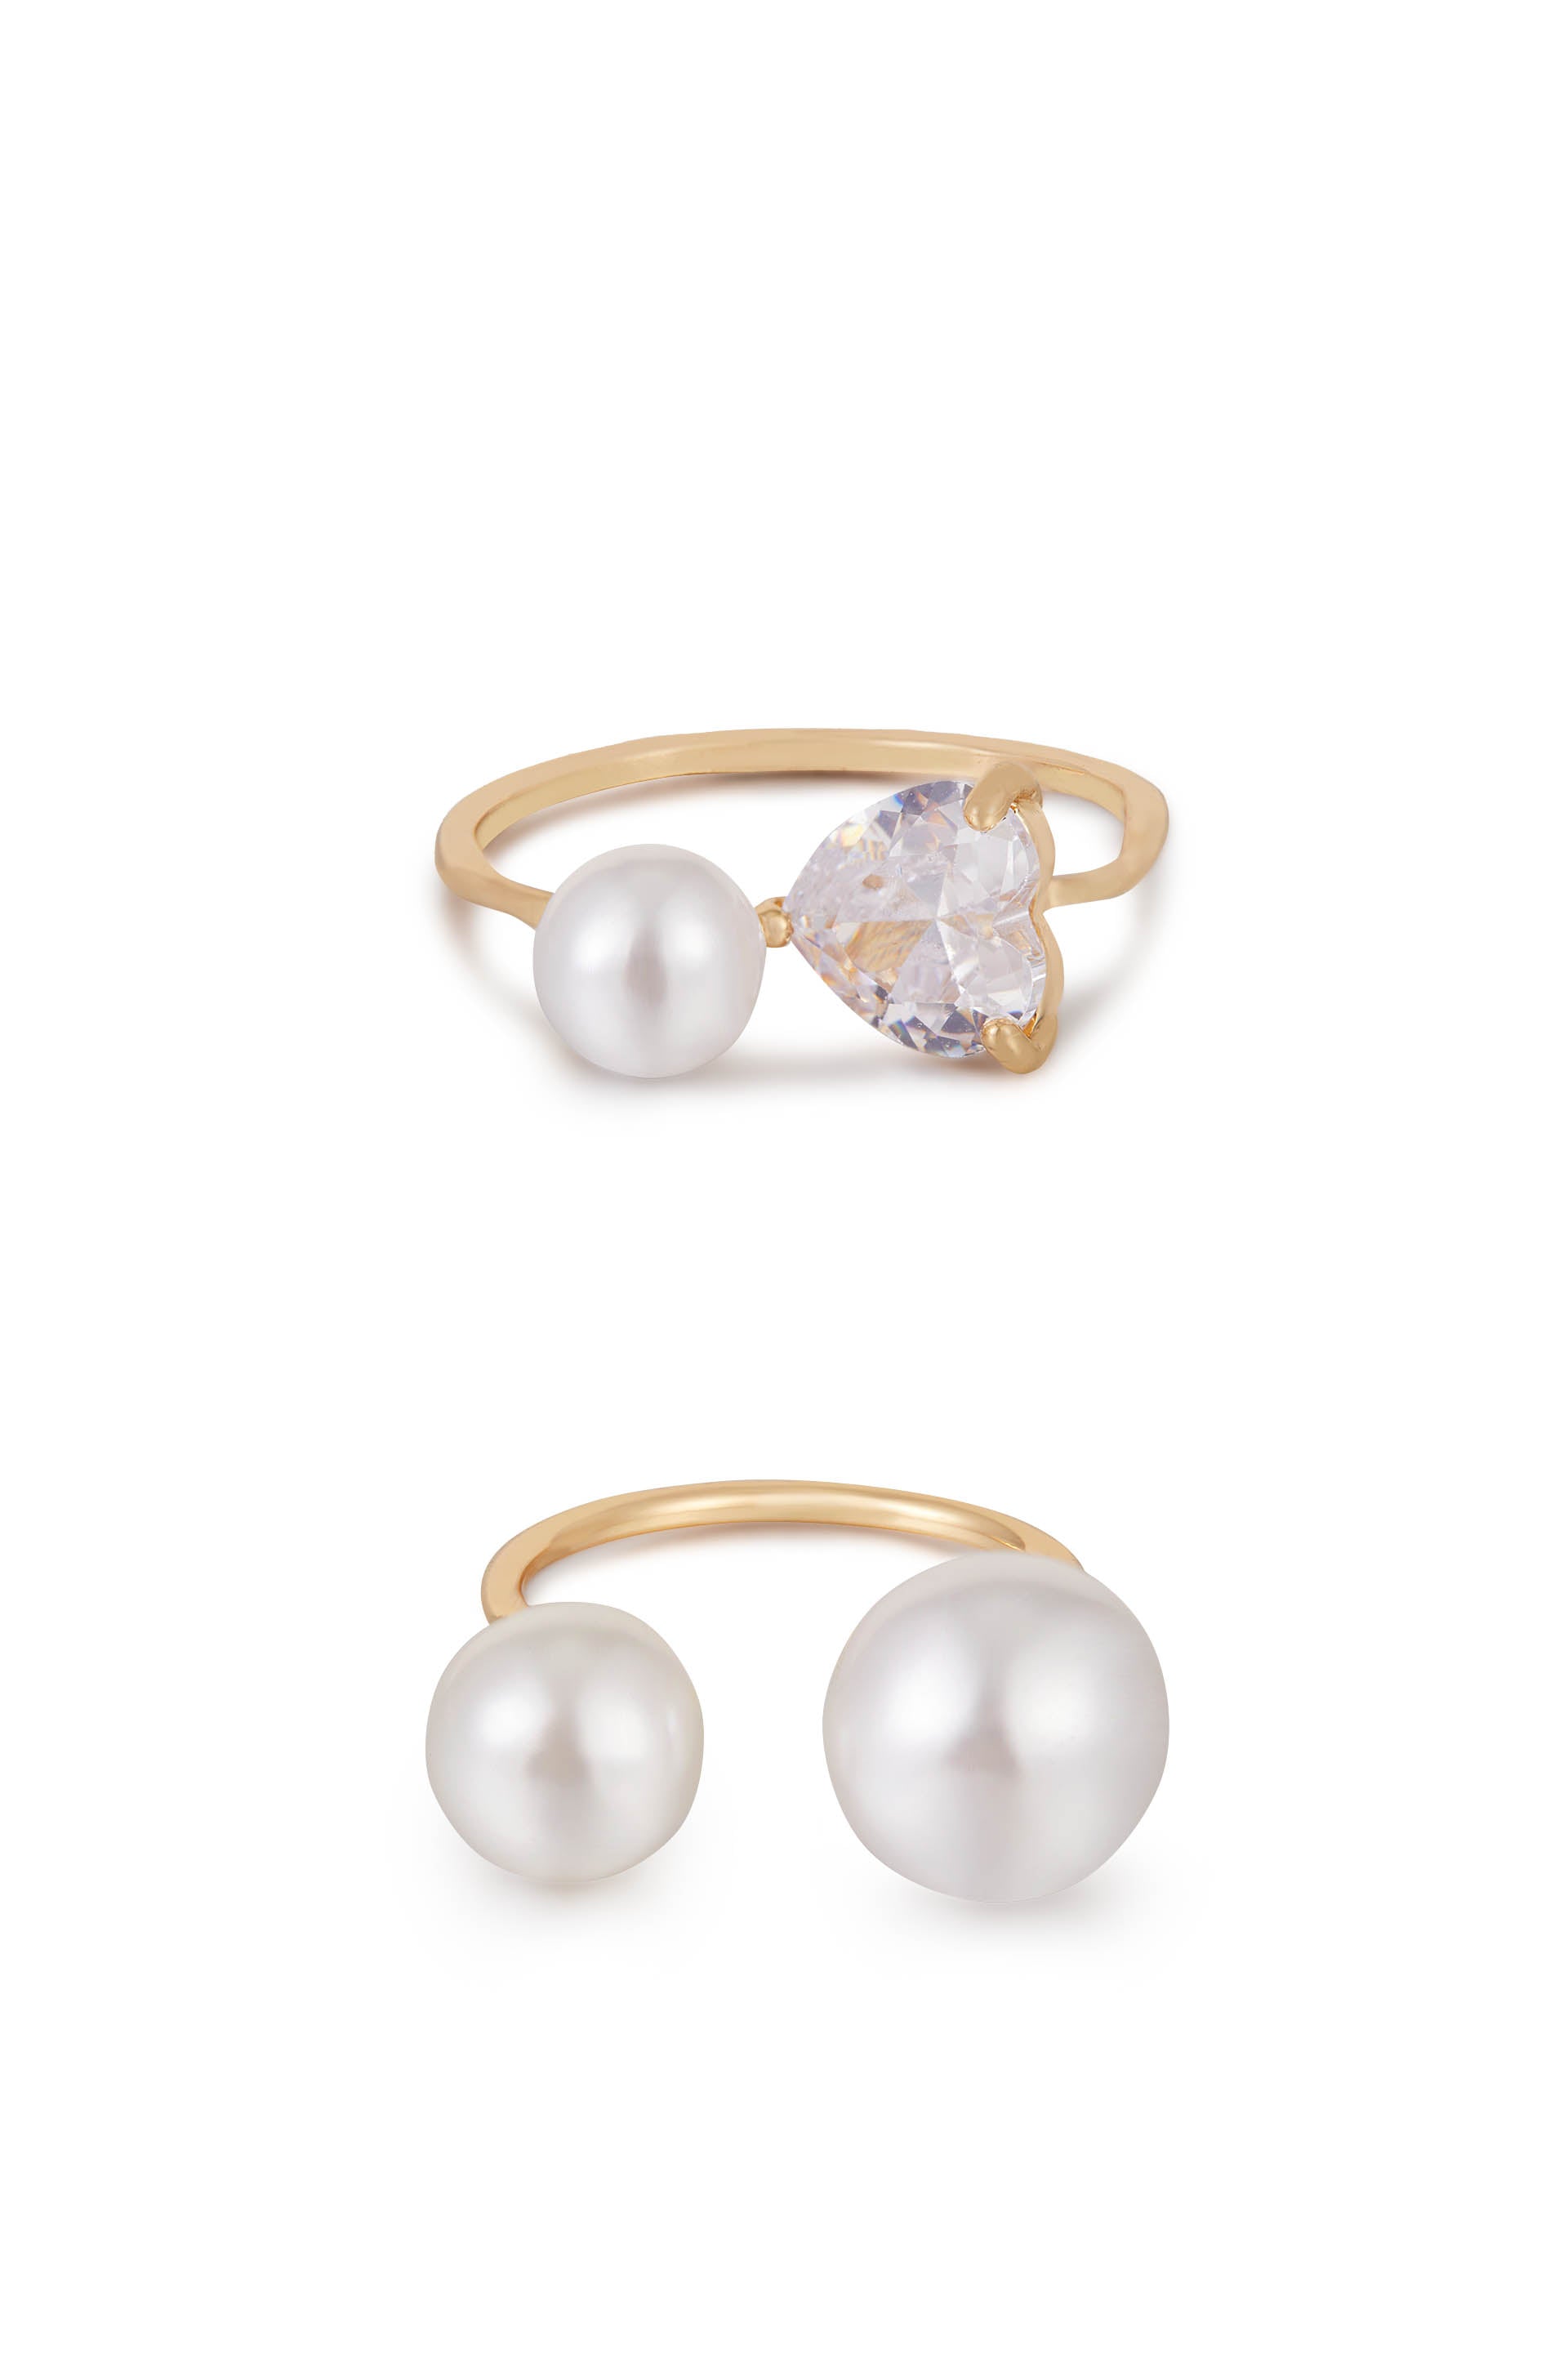 Multi-Pearl & Crystal Adjustable 18k Gold Plated Ring Set